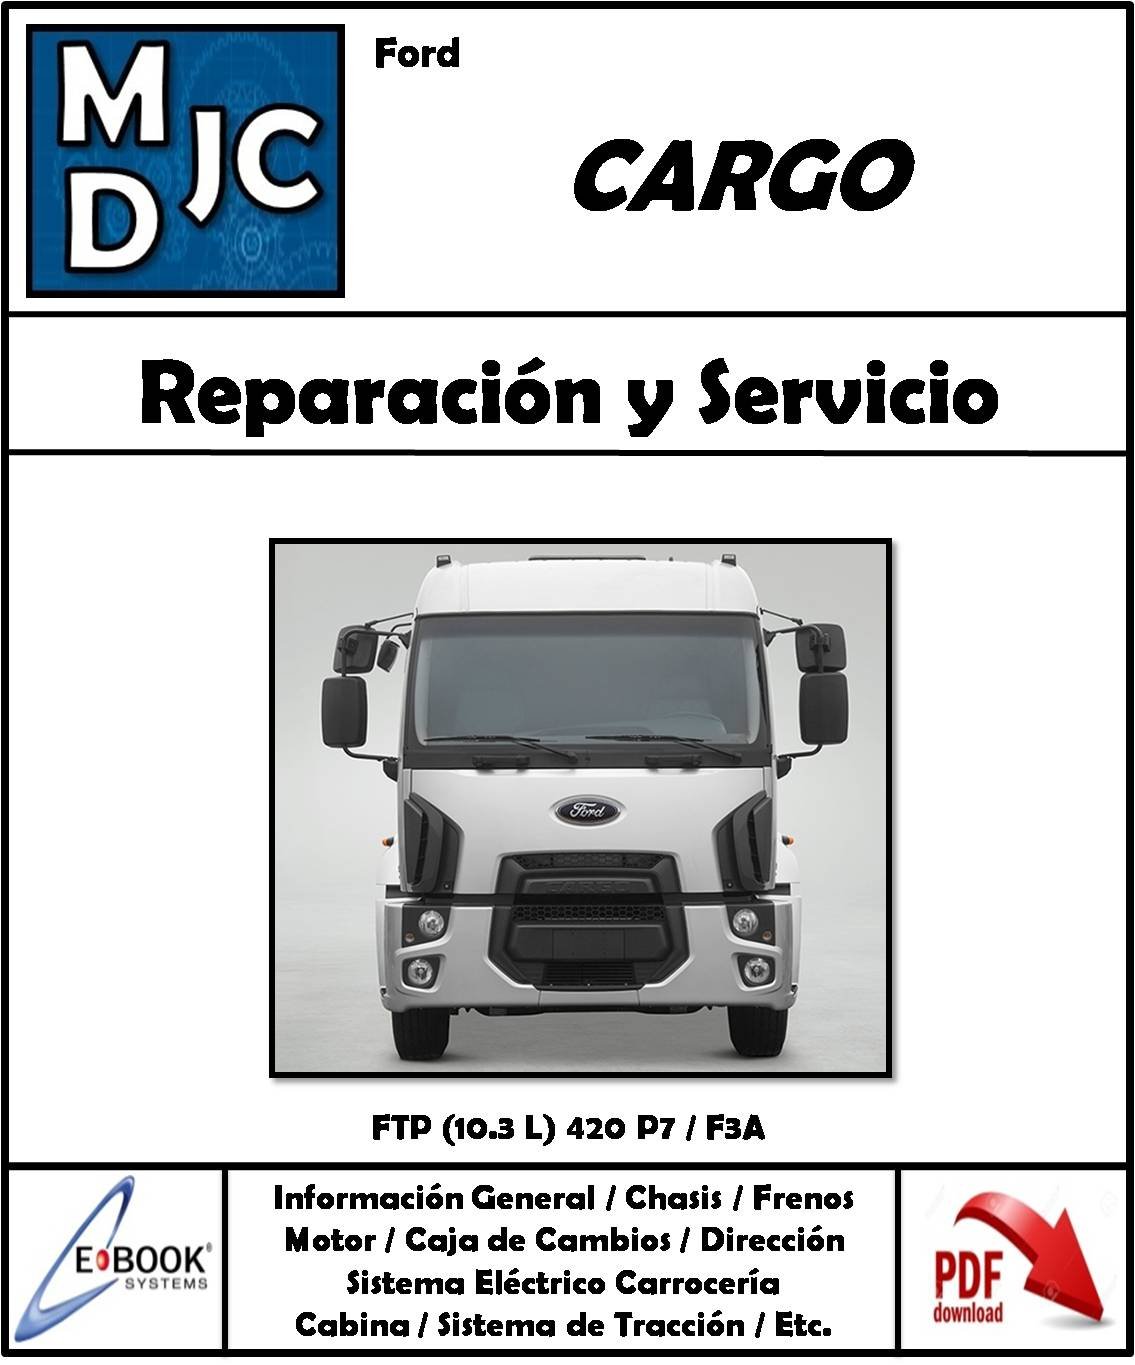 Ford Cargo con motor FTP (10.3 L)